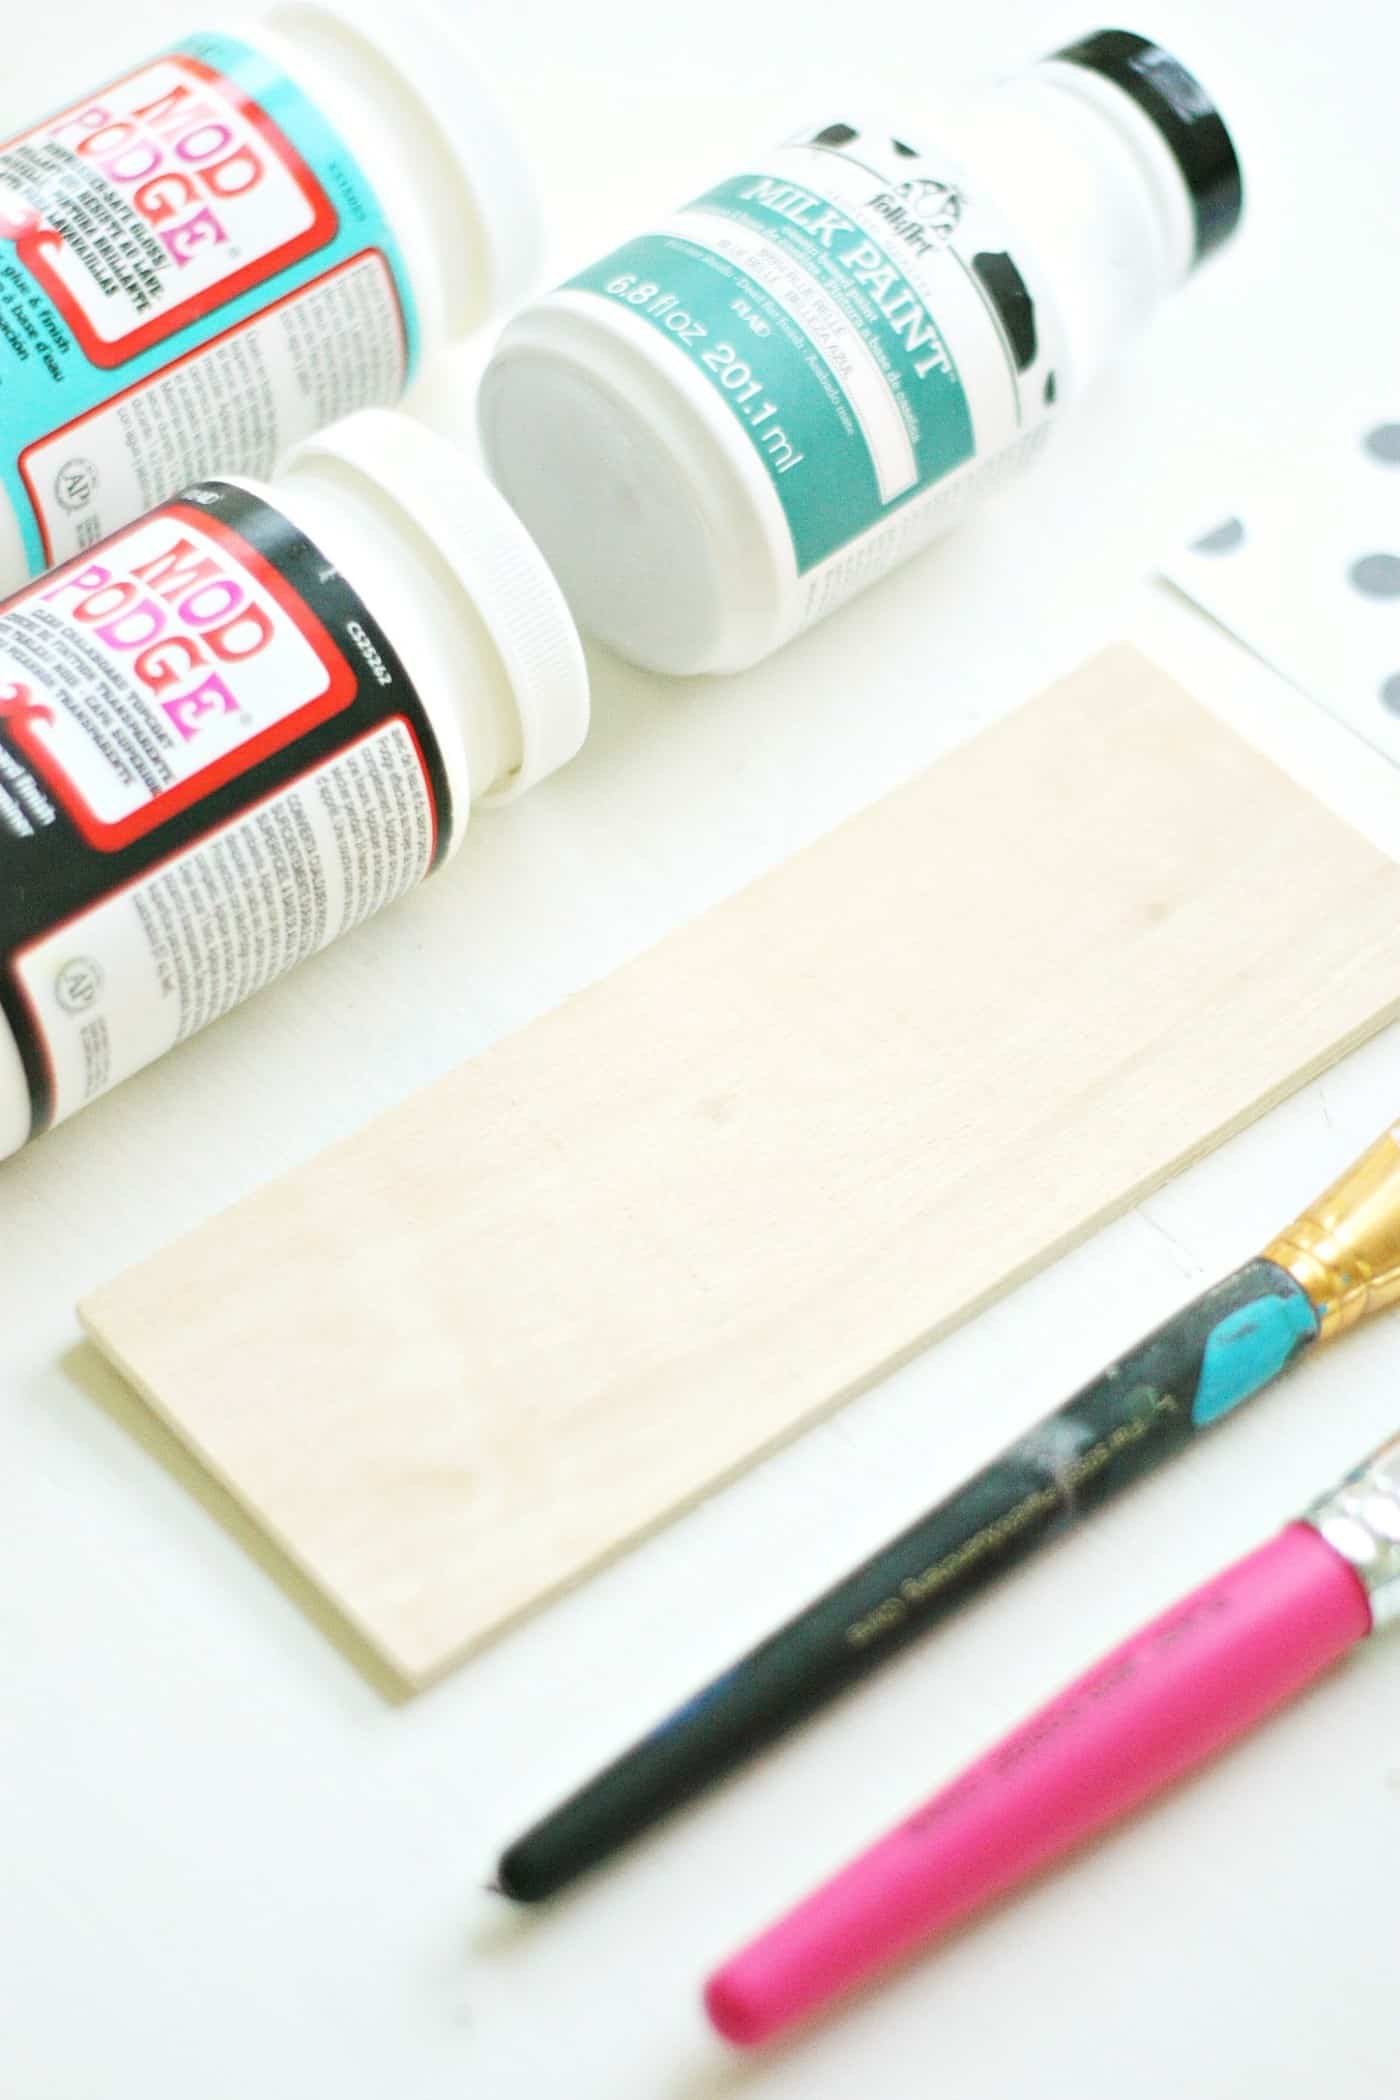 Chalkboard paint, Mod Podge, milk paint, and a wood rectangle